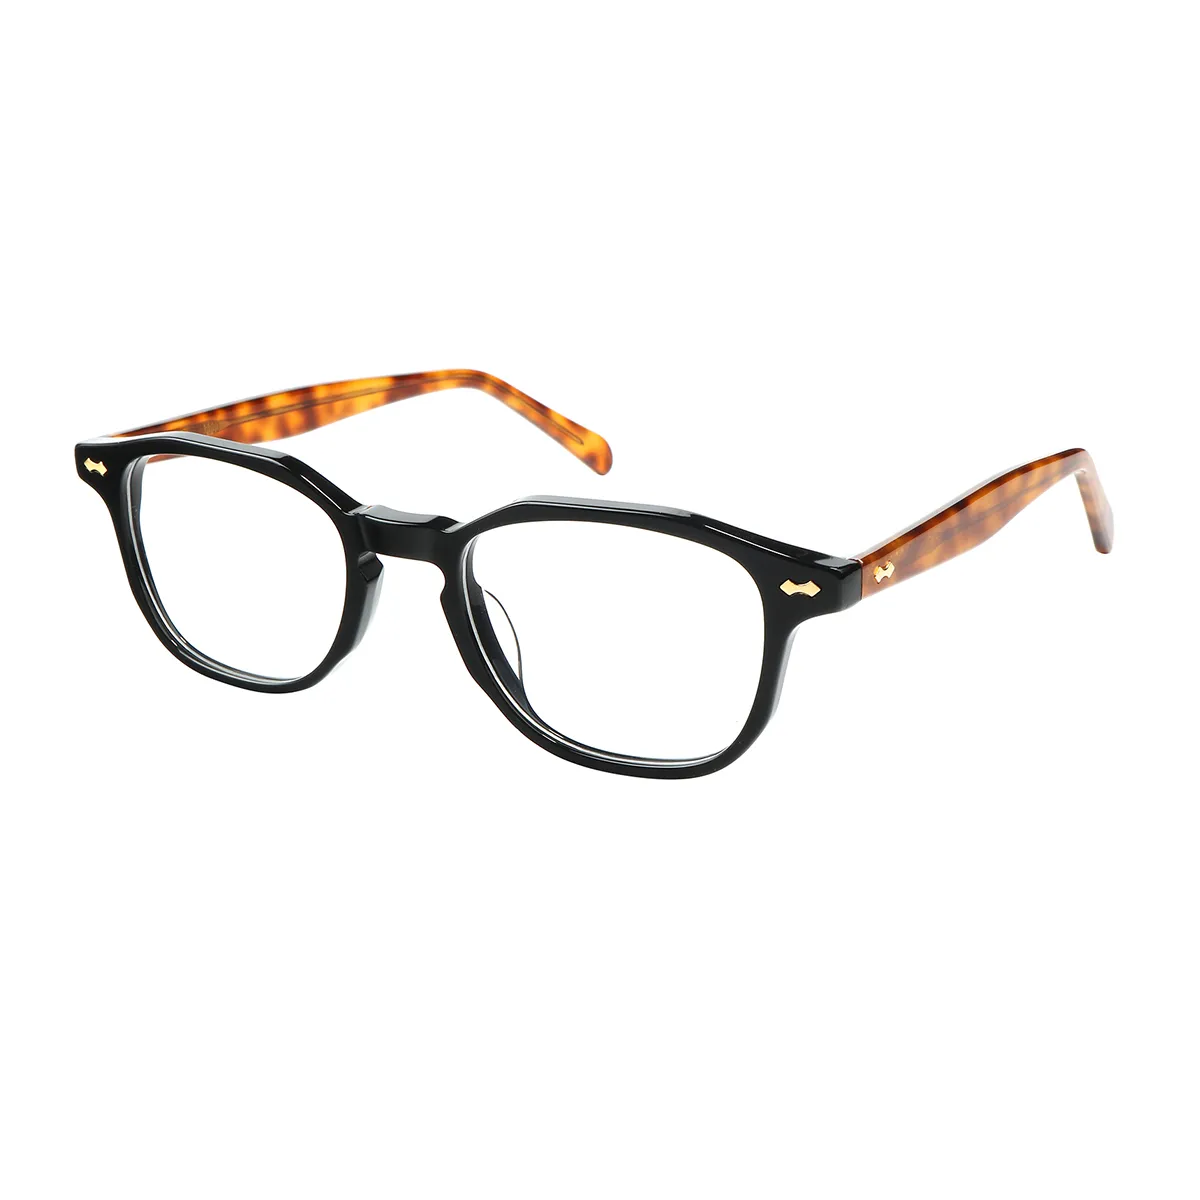 Allais - Square  Glasses for Men & Women